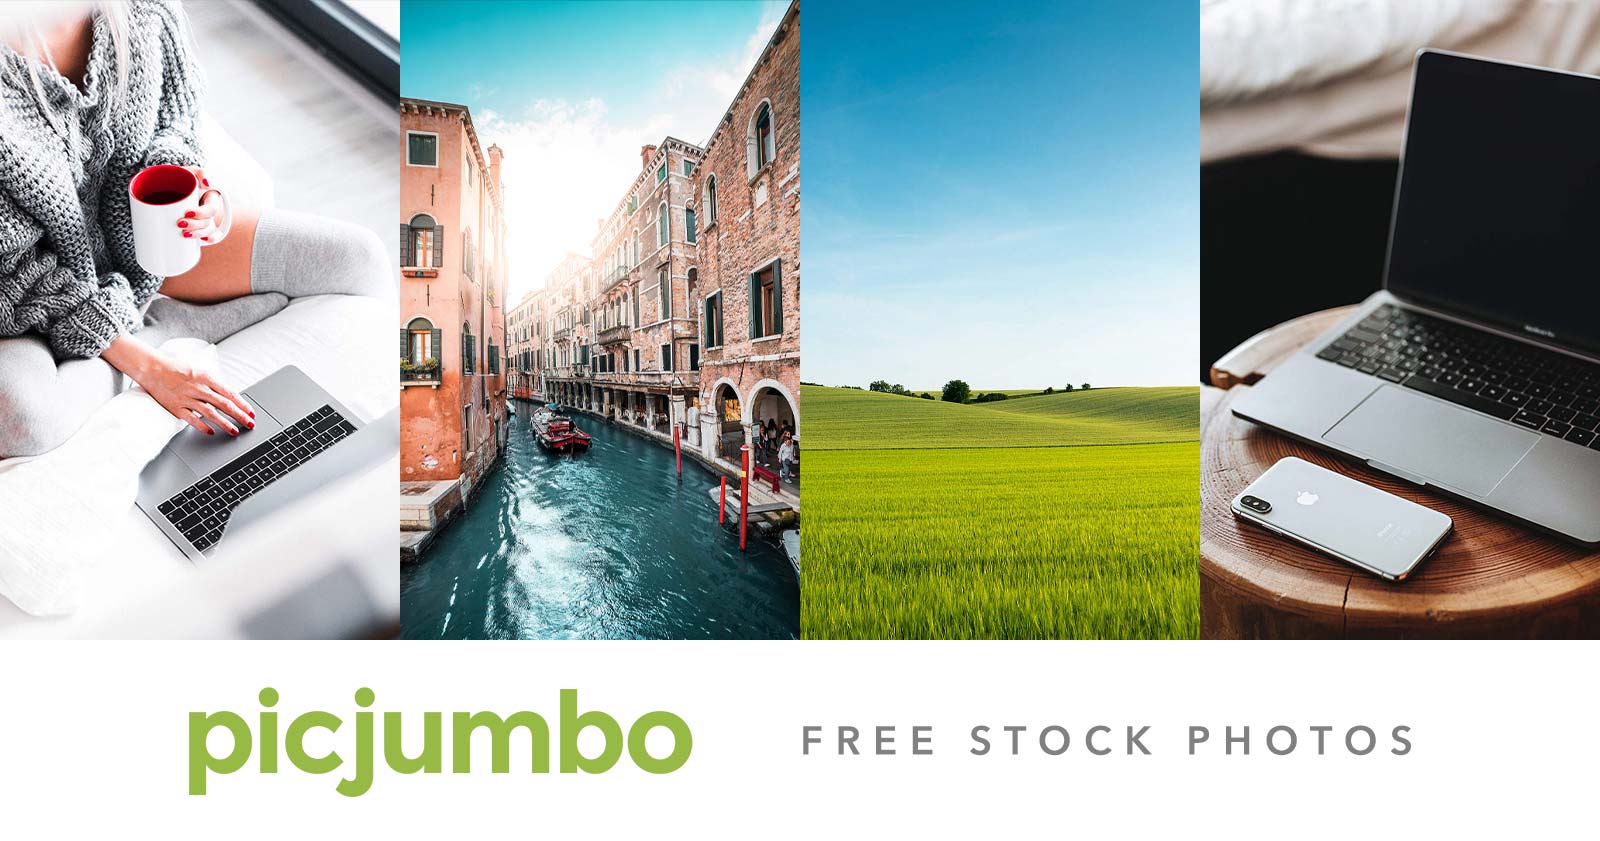 picjumbo: Free Stock Photos